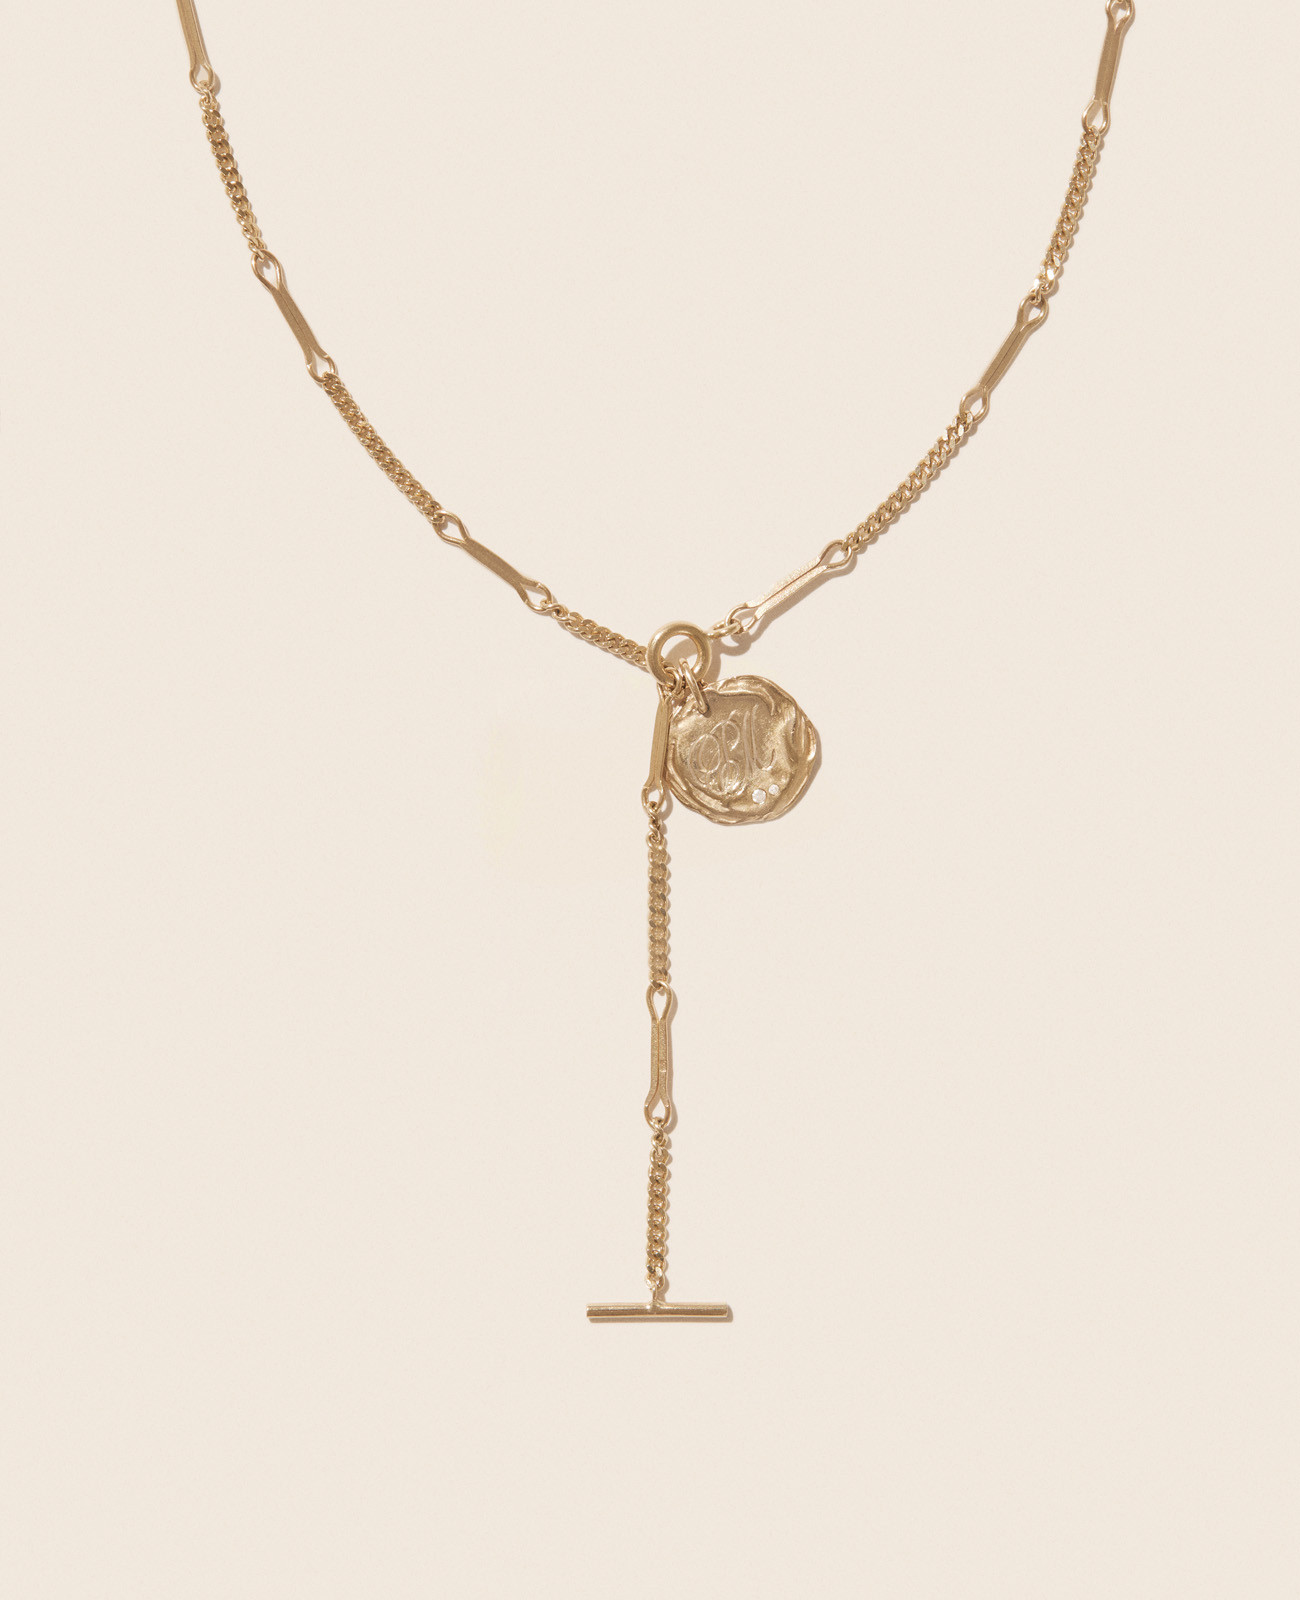 PETRA N°2 necklace pascale monvoisin jewelry paris